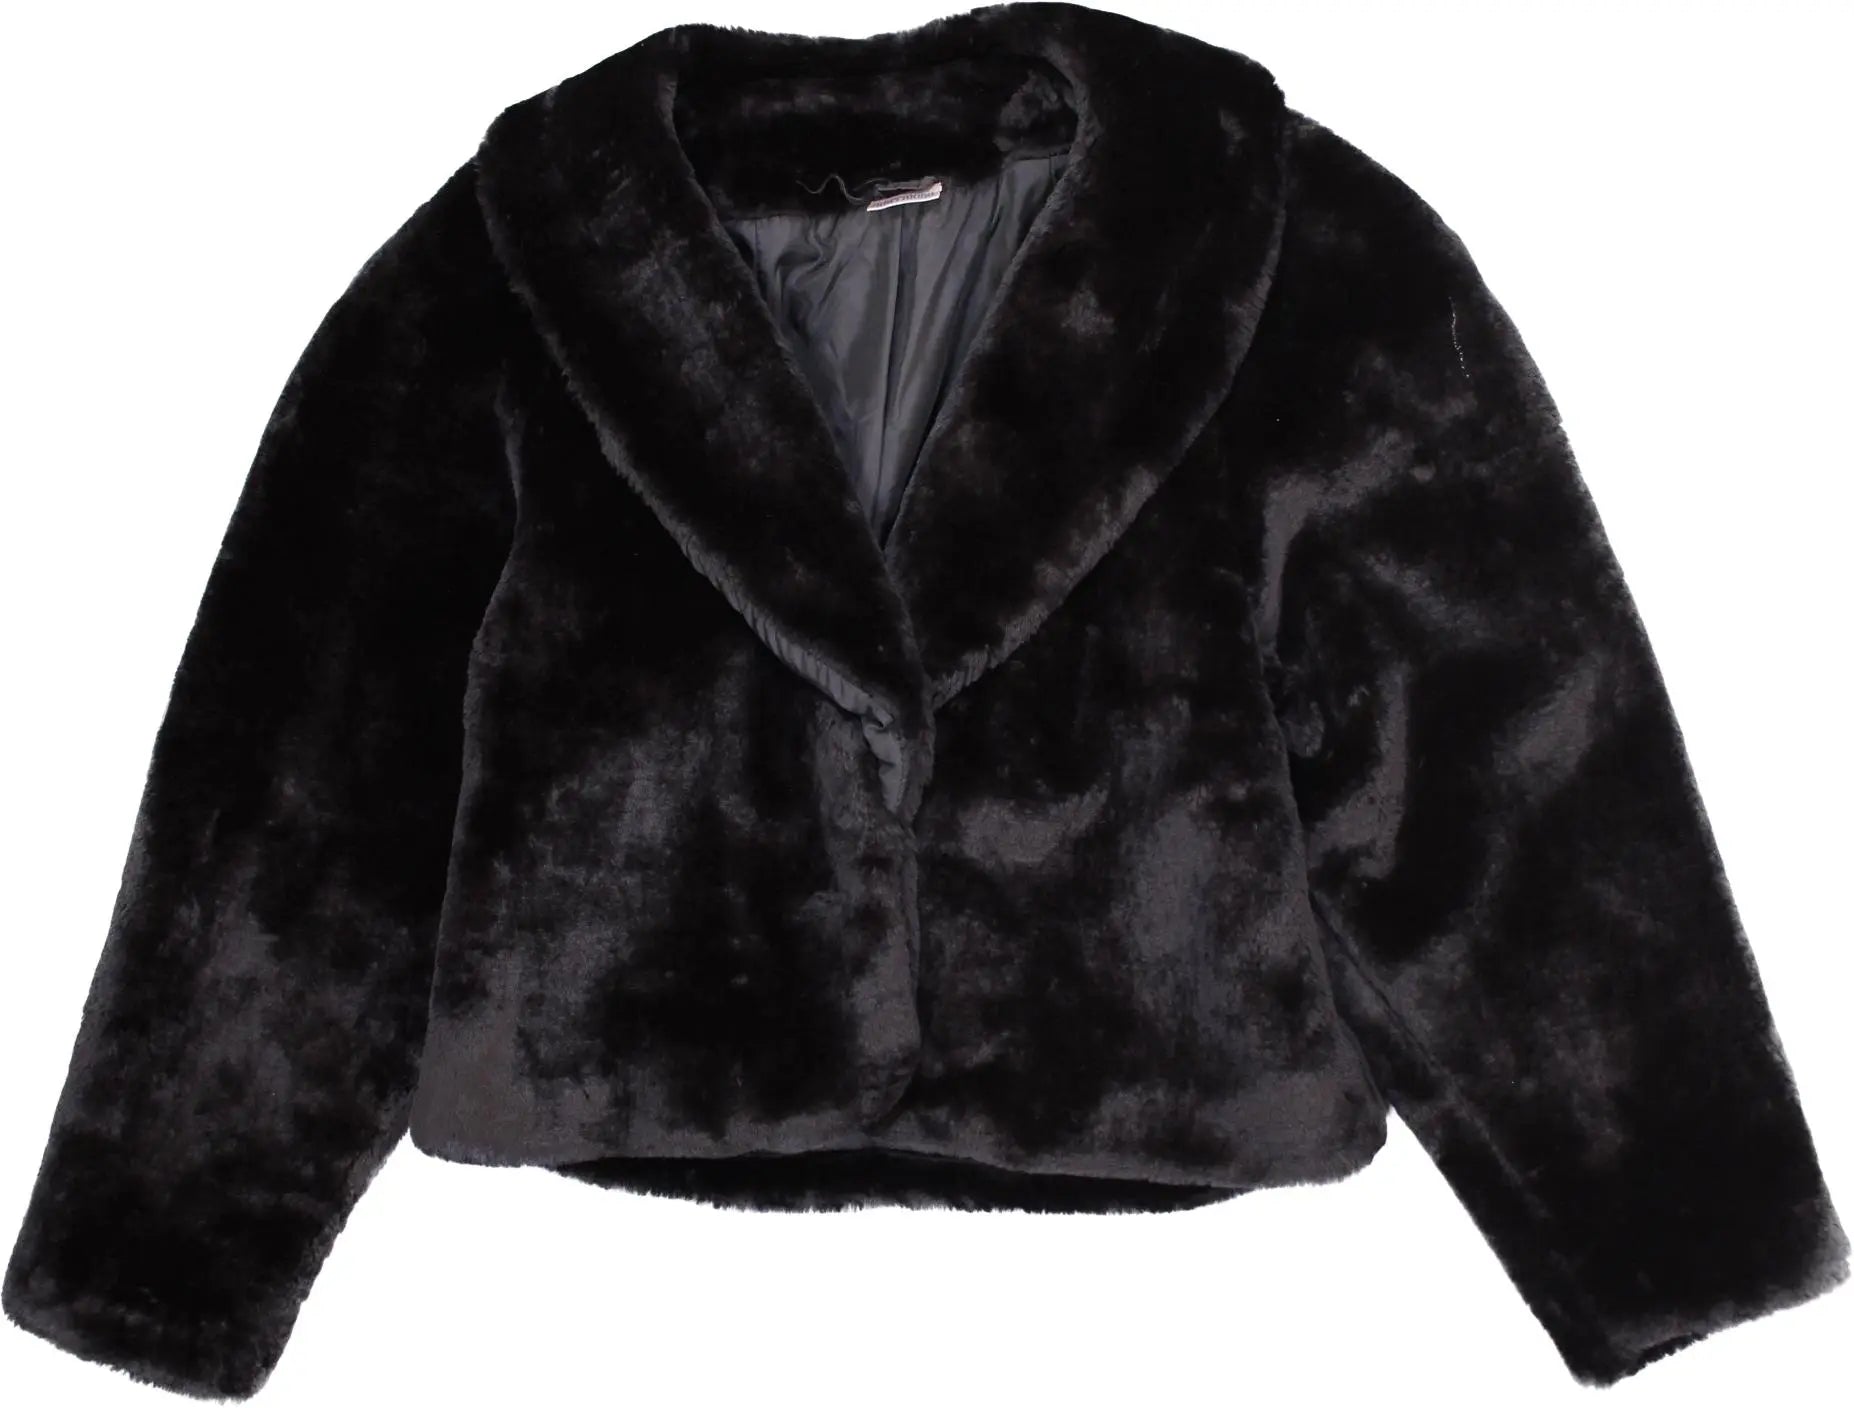 Akkerman - Black Faux Fur Coat- ThriftTale.com - Vintage and second handclothing